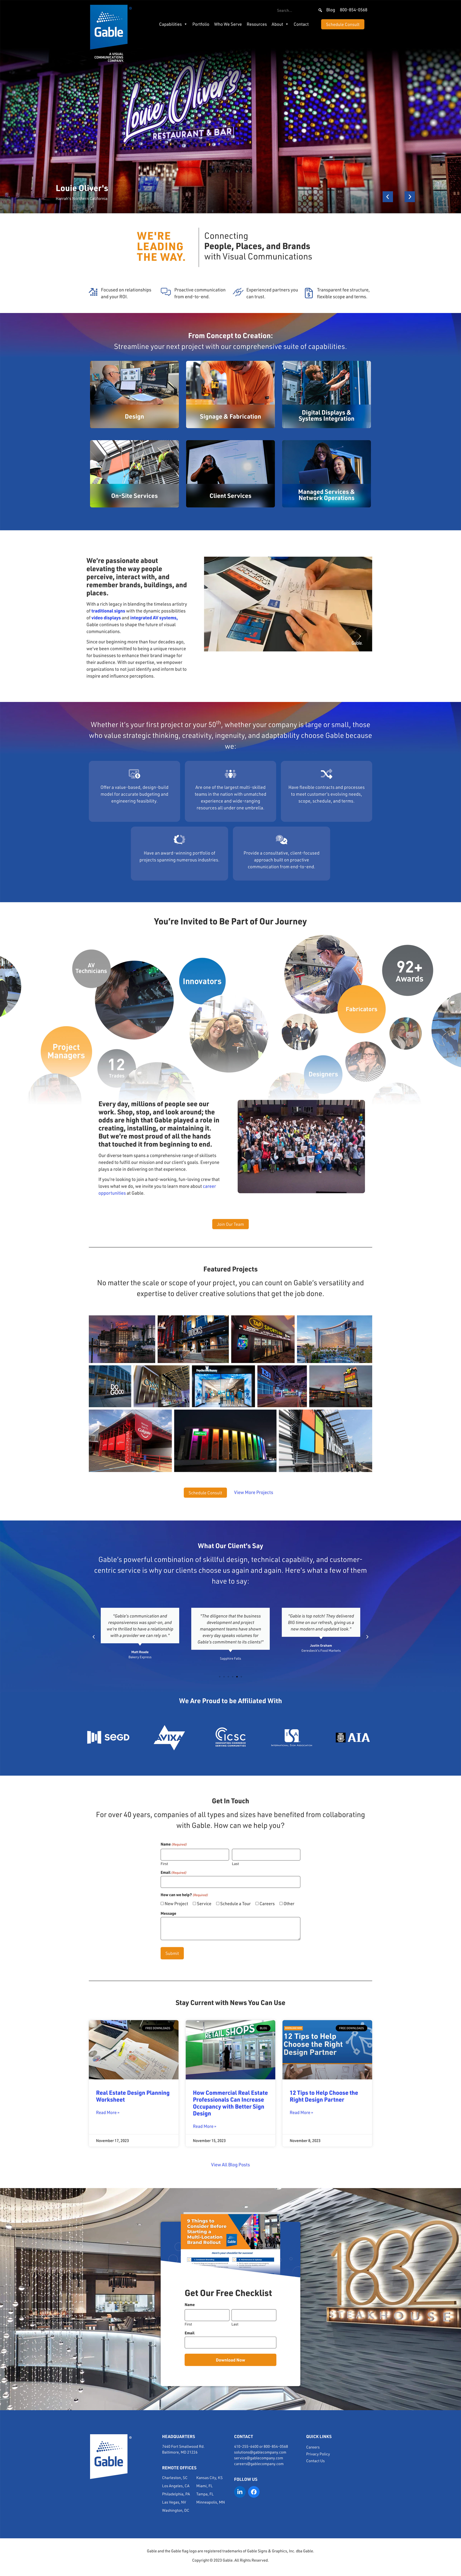 gablecompany.com homepage screenshot